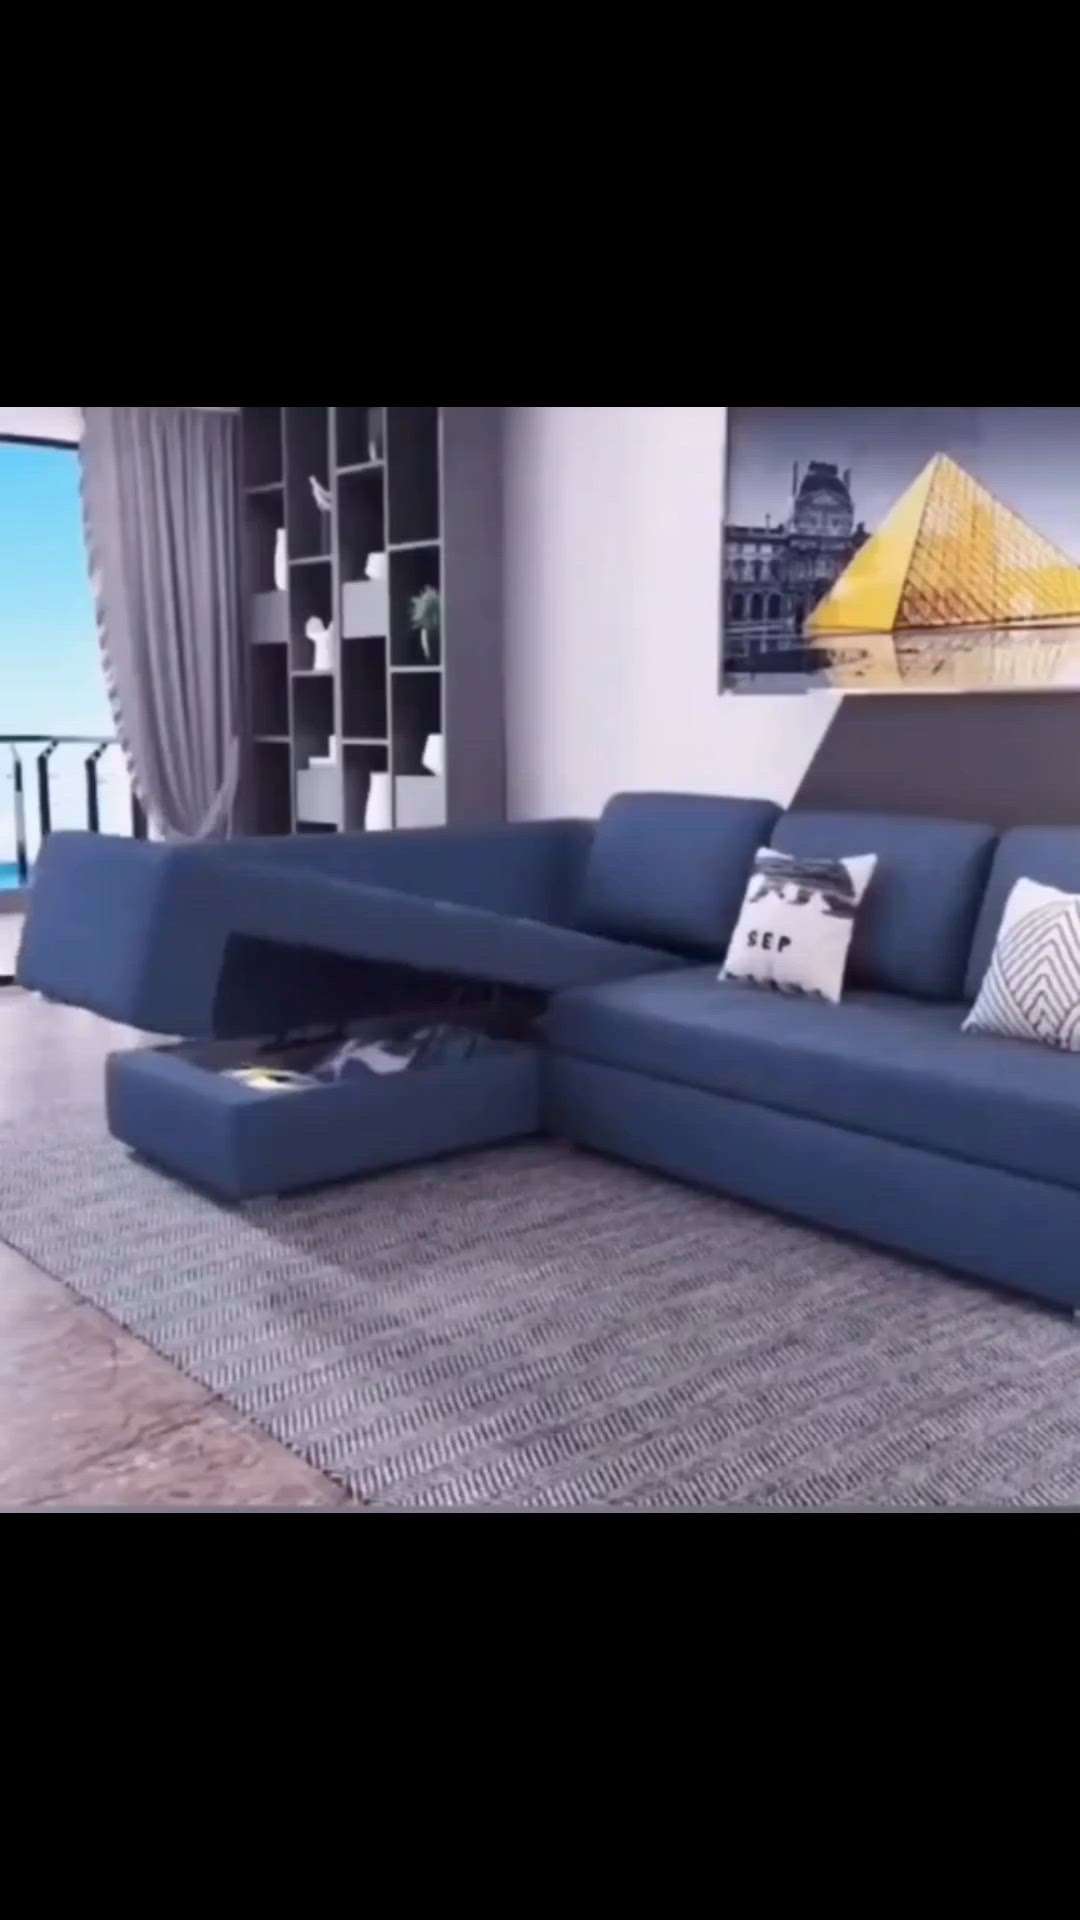 multi functional sofa 



#Sofas #LivingroomDesigns #homeinterior #furniture